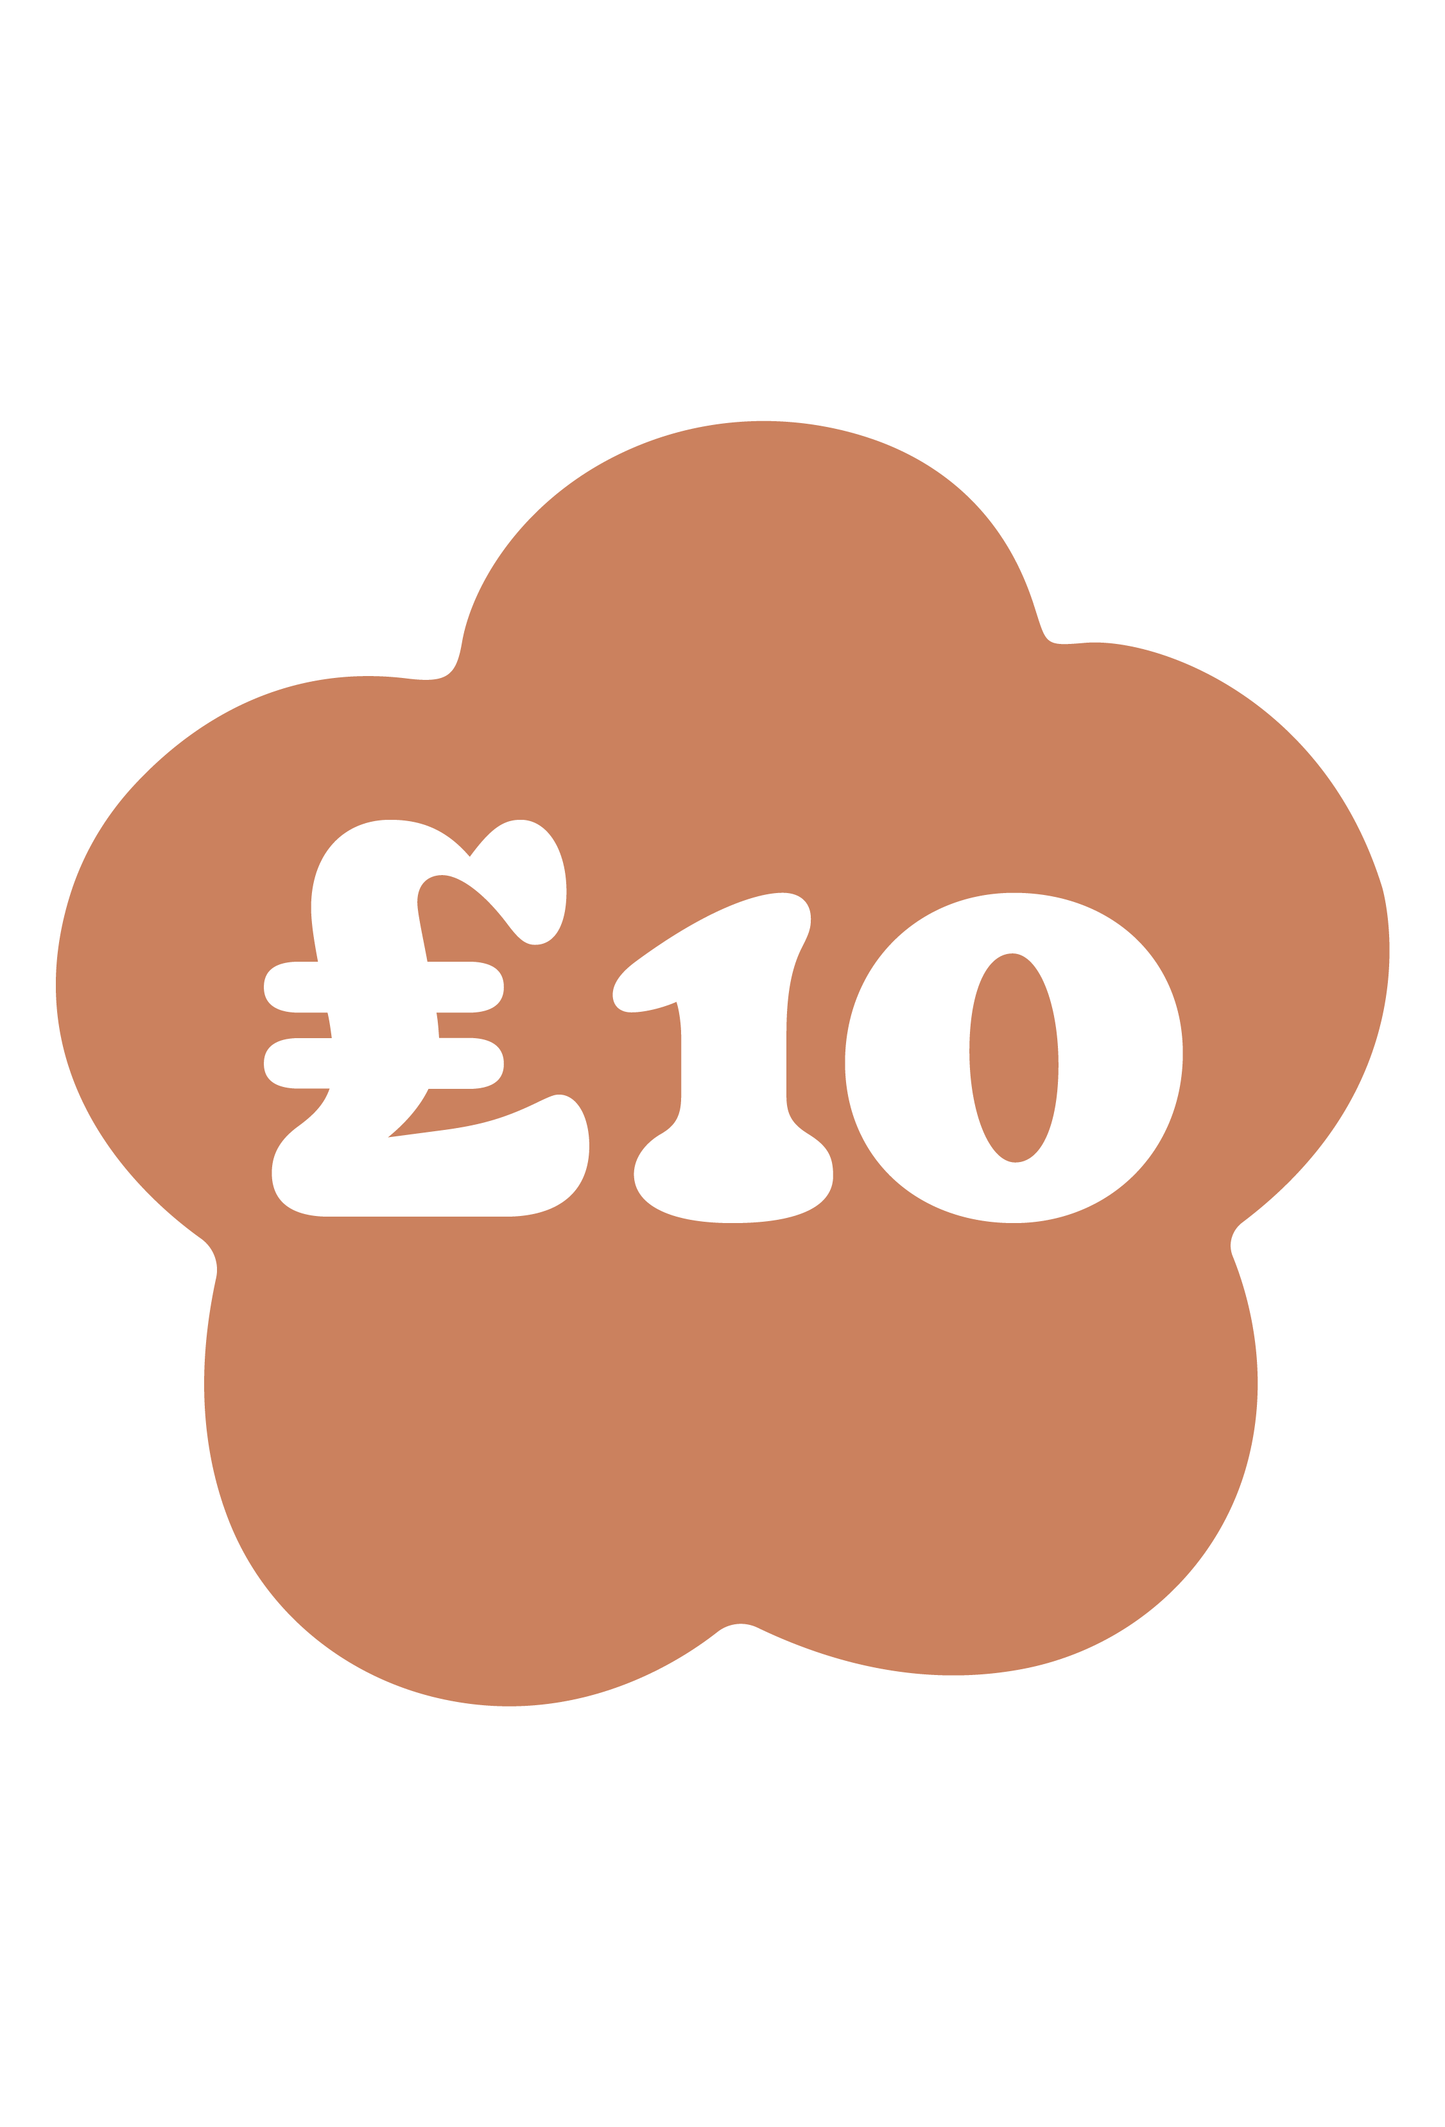 £10 PERIOD POVERTY DONATION